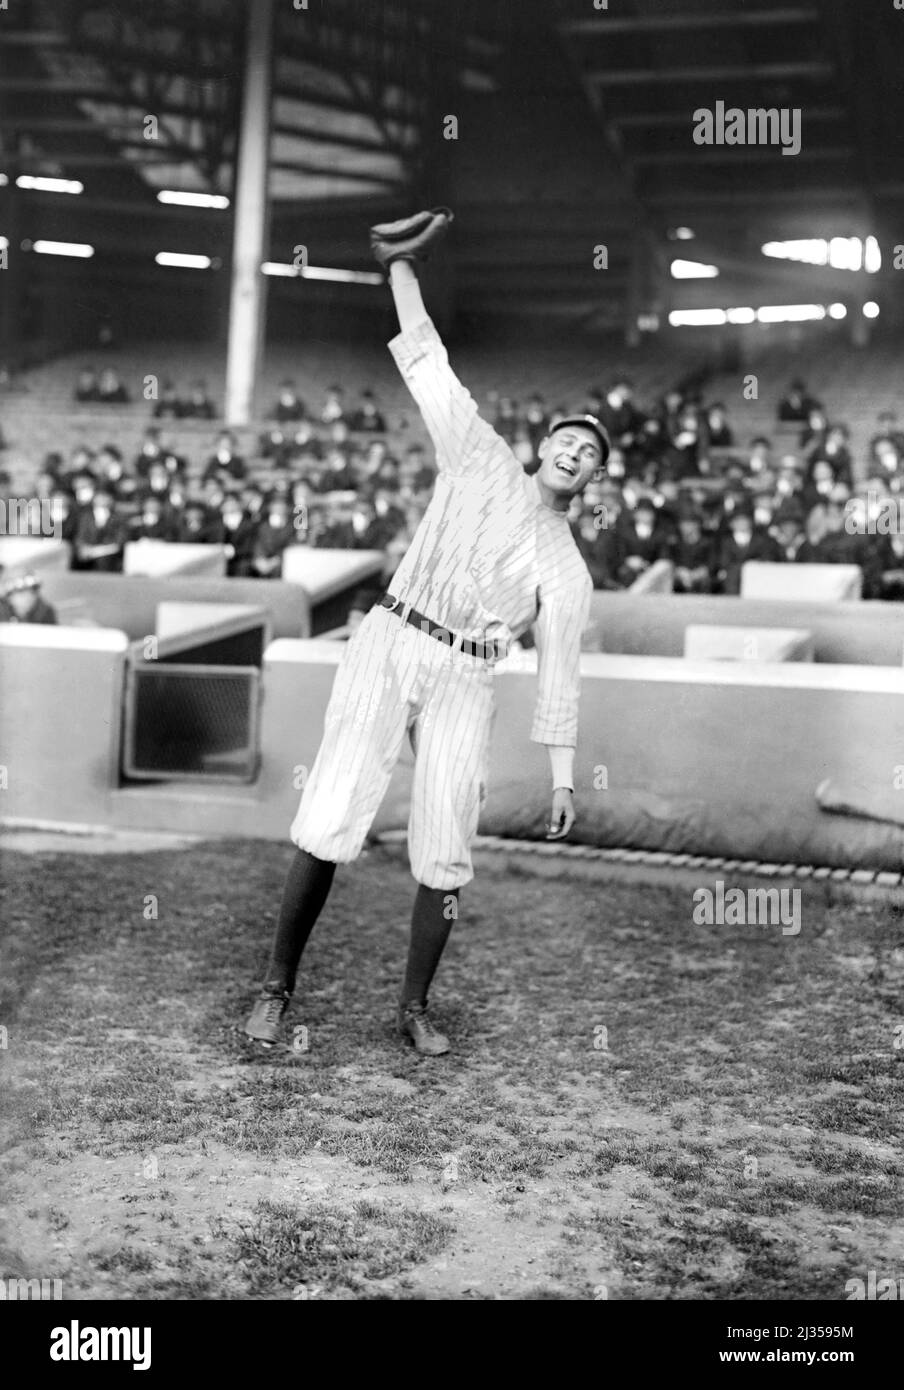 Wally Pipp, Major League Baseball Player, New York Yankees, Bain News Service, 1916 Stock Photo